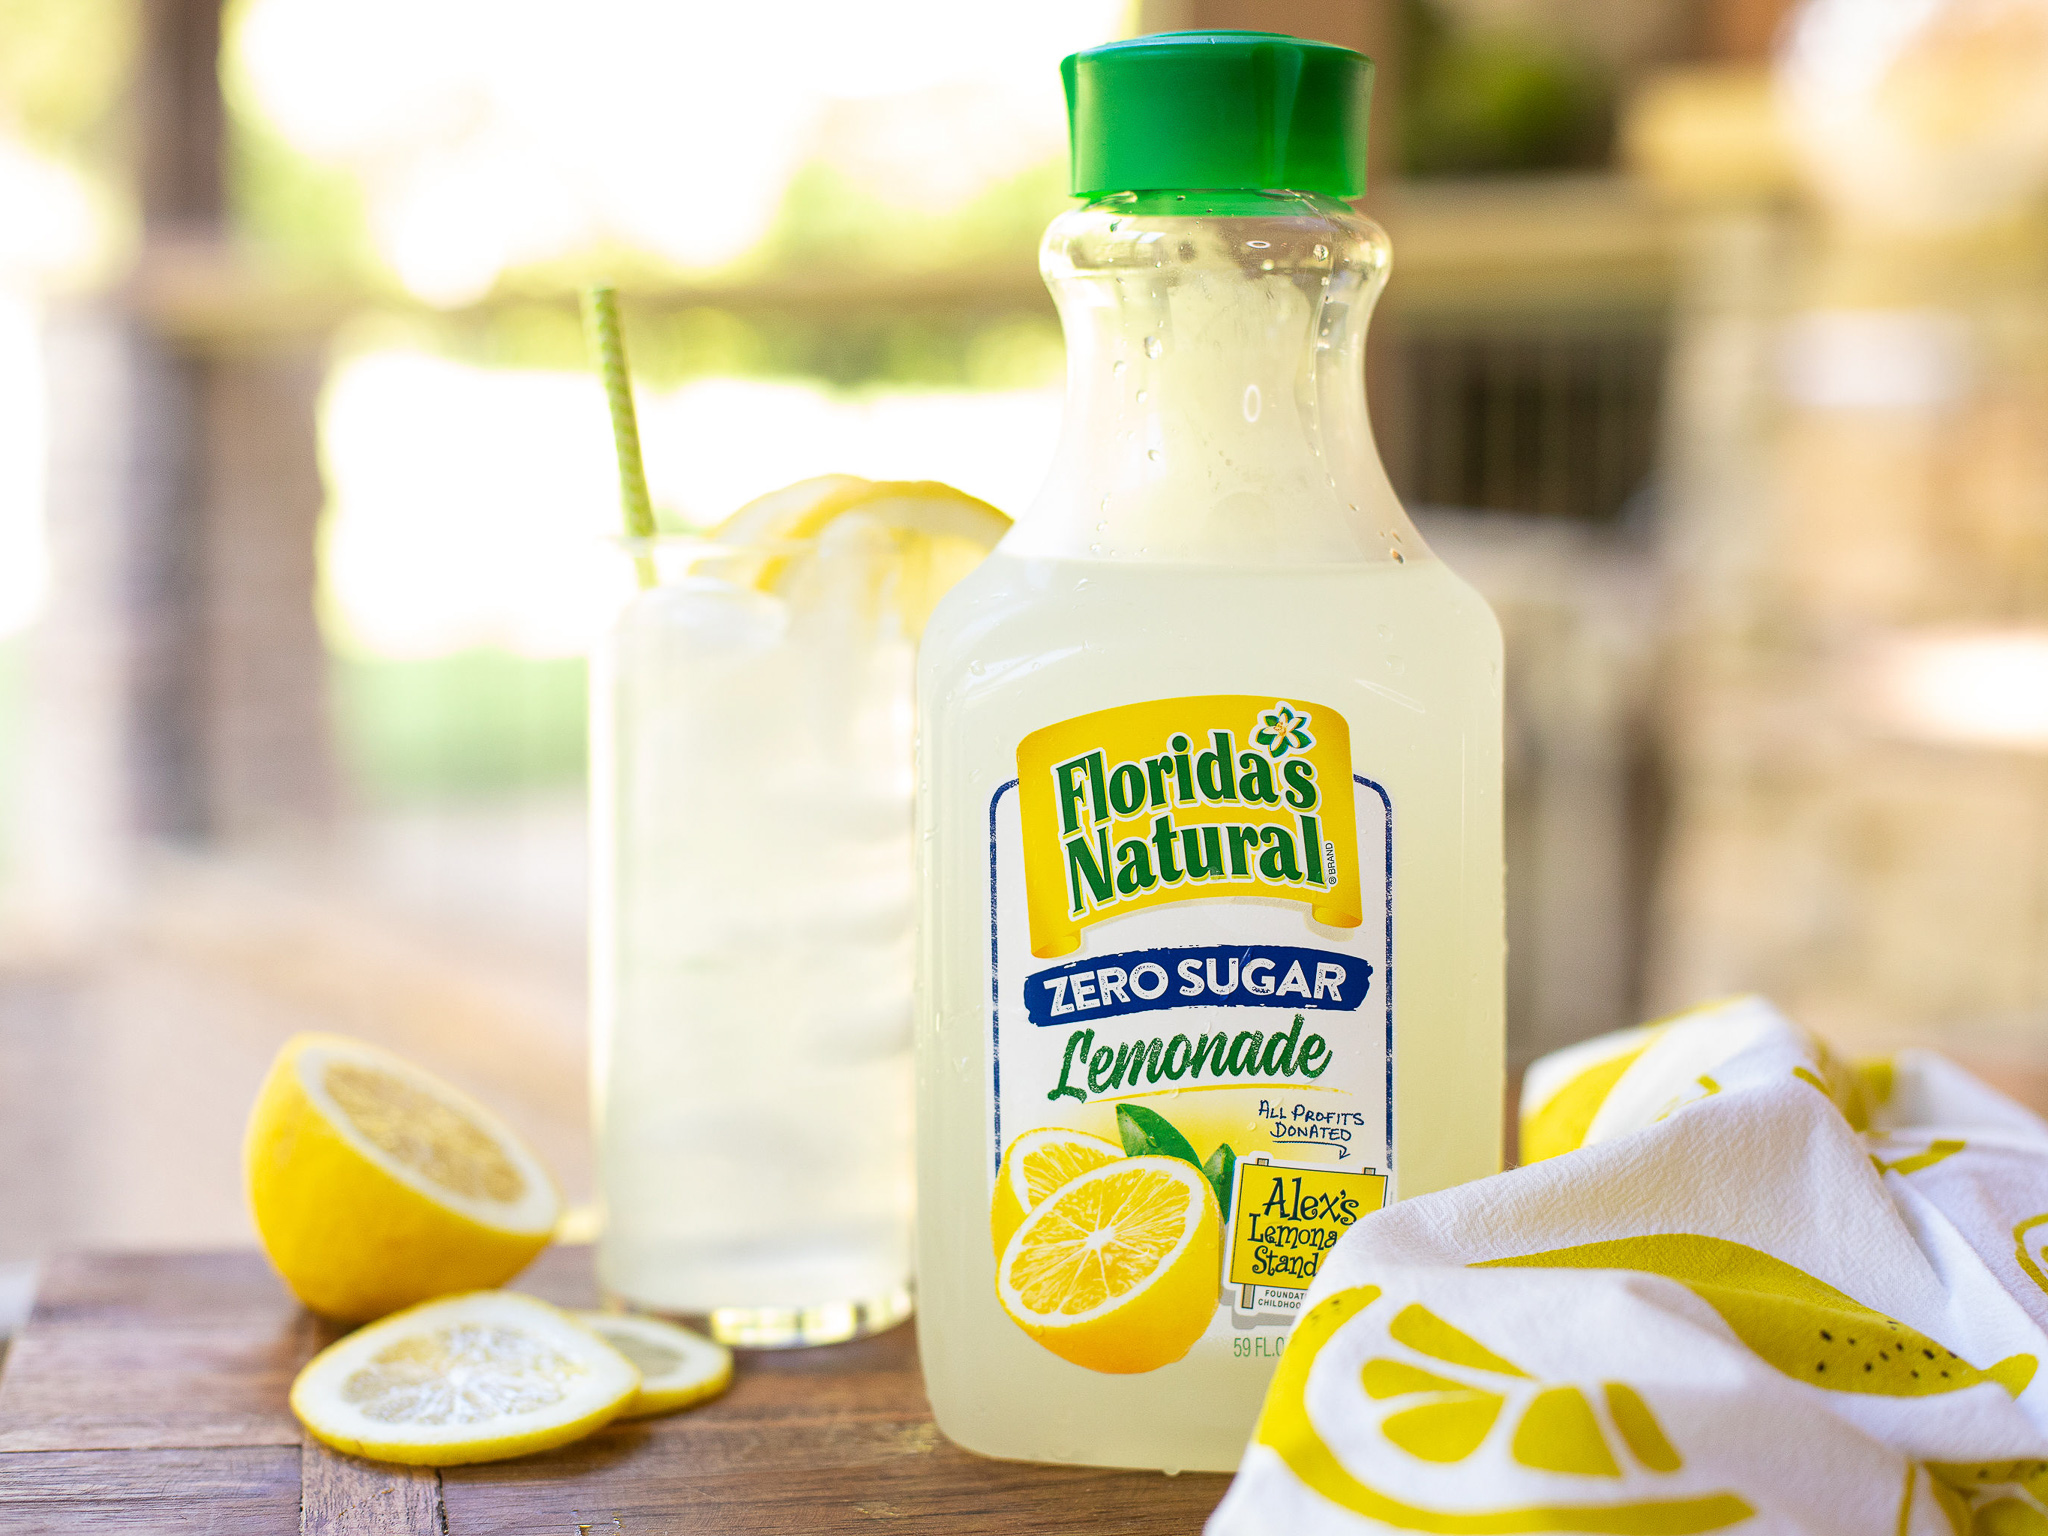 Florida’s Natural Zero Sugar Lemonade Just 50¢ At Publix